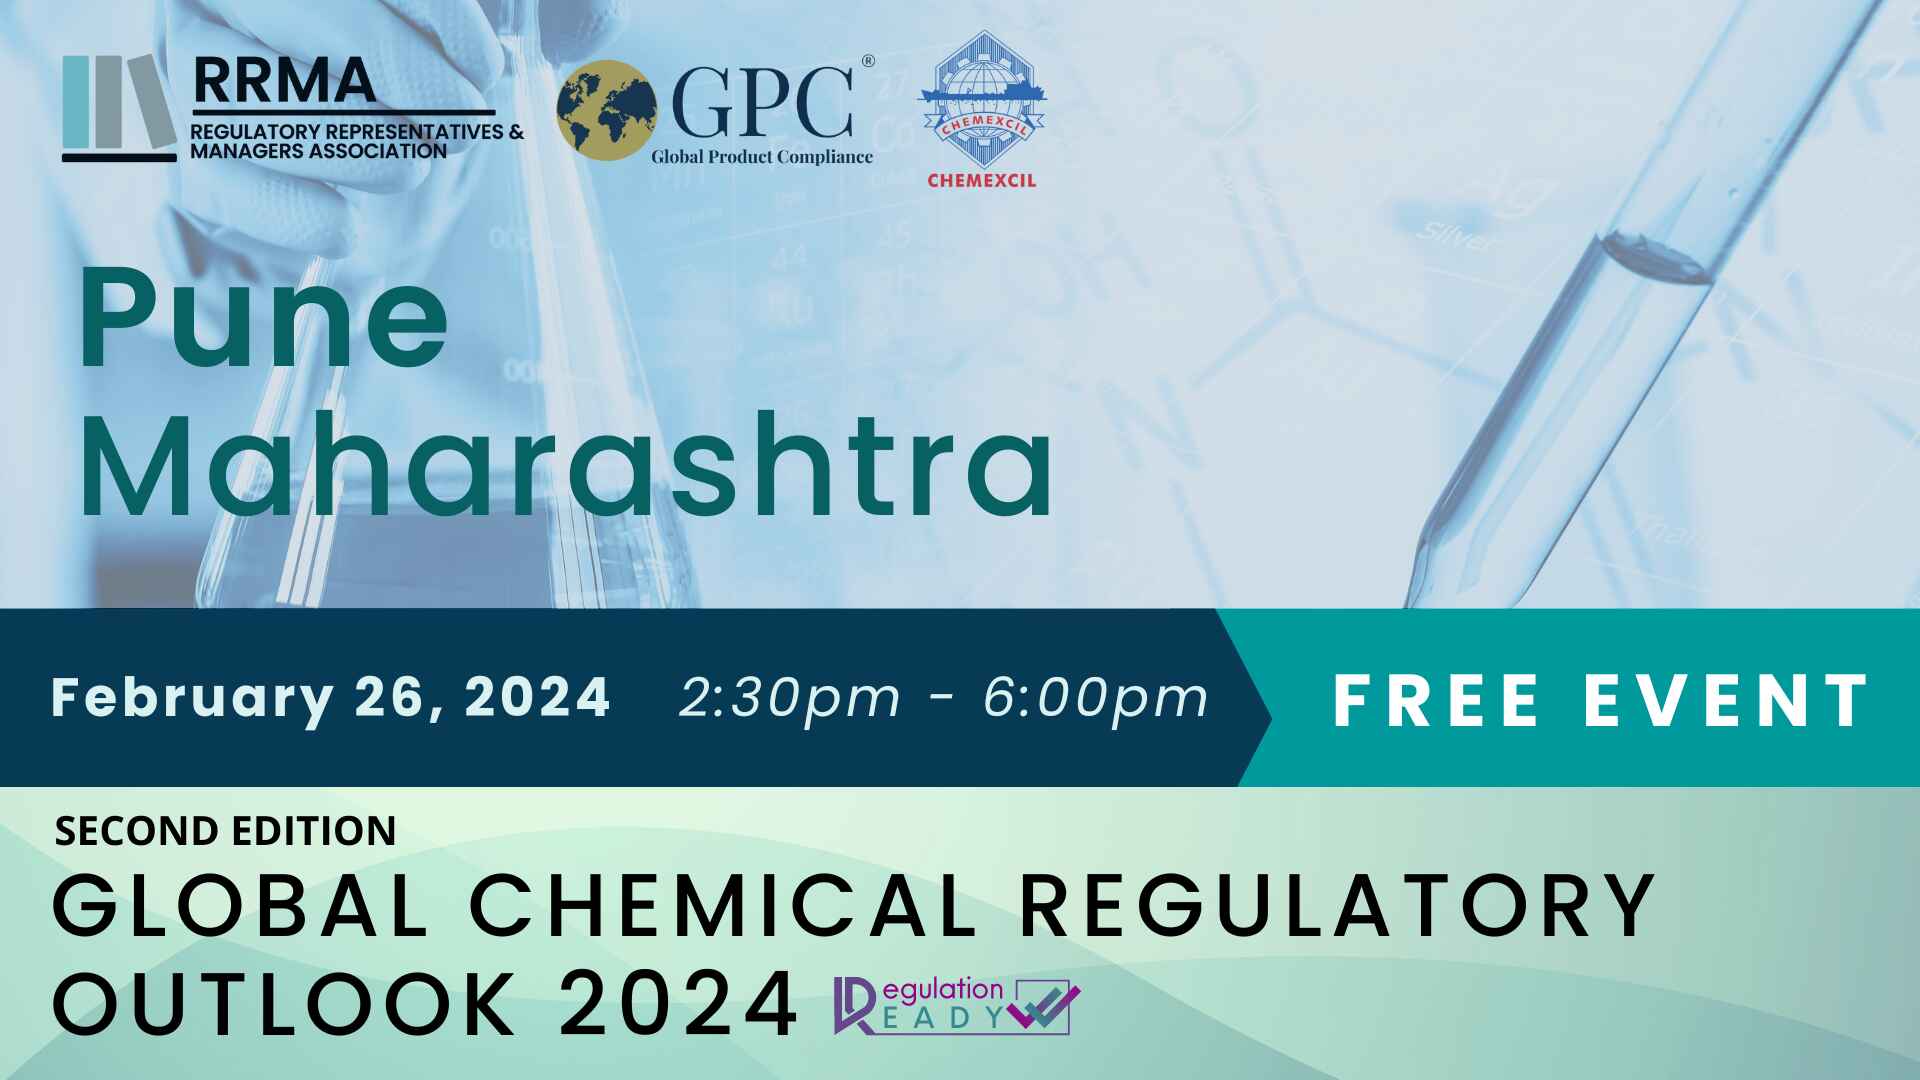 Global Chemical Regulatory Outlook 2024 in Pune